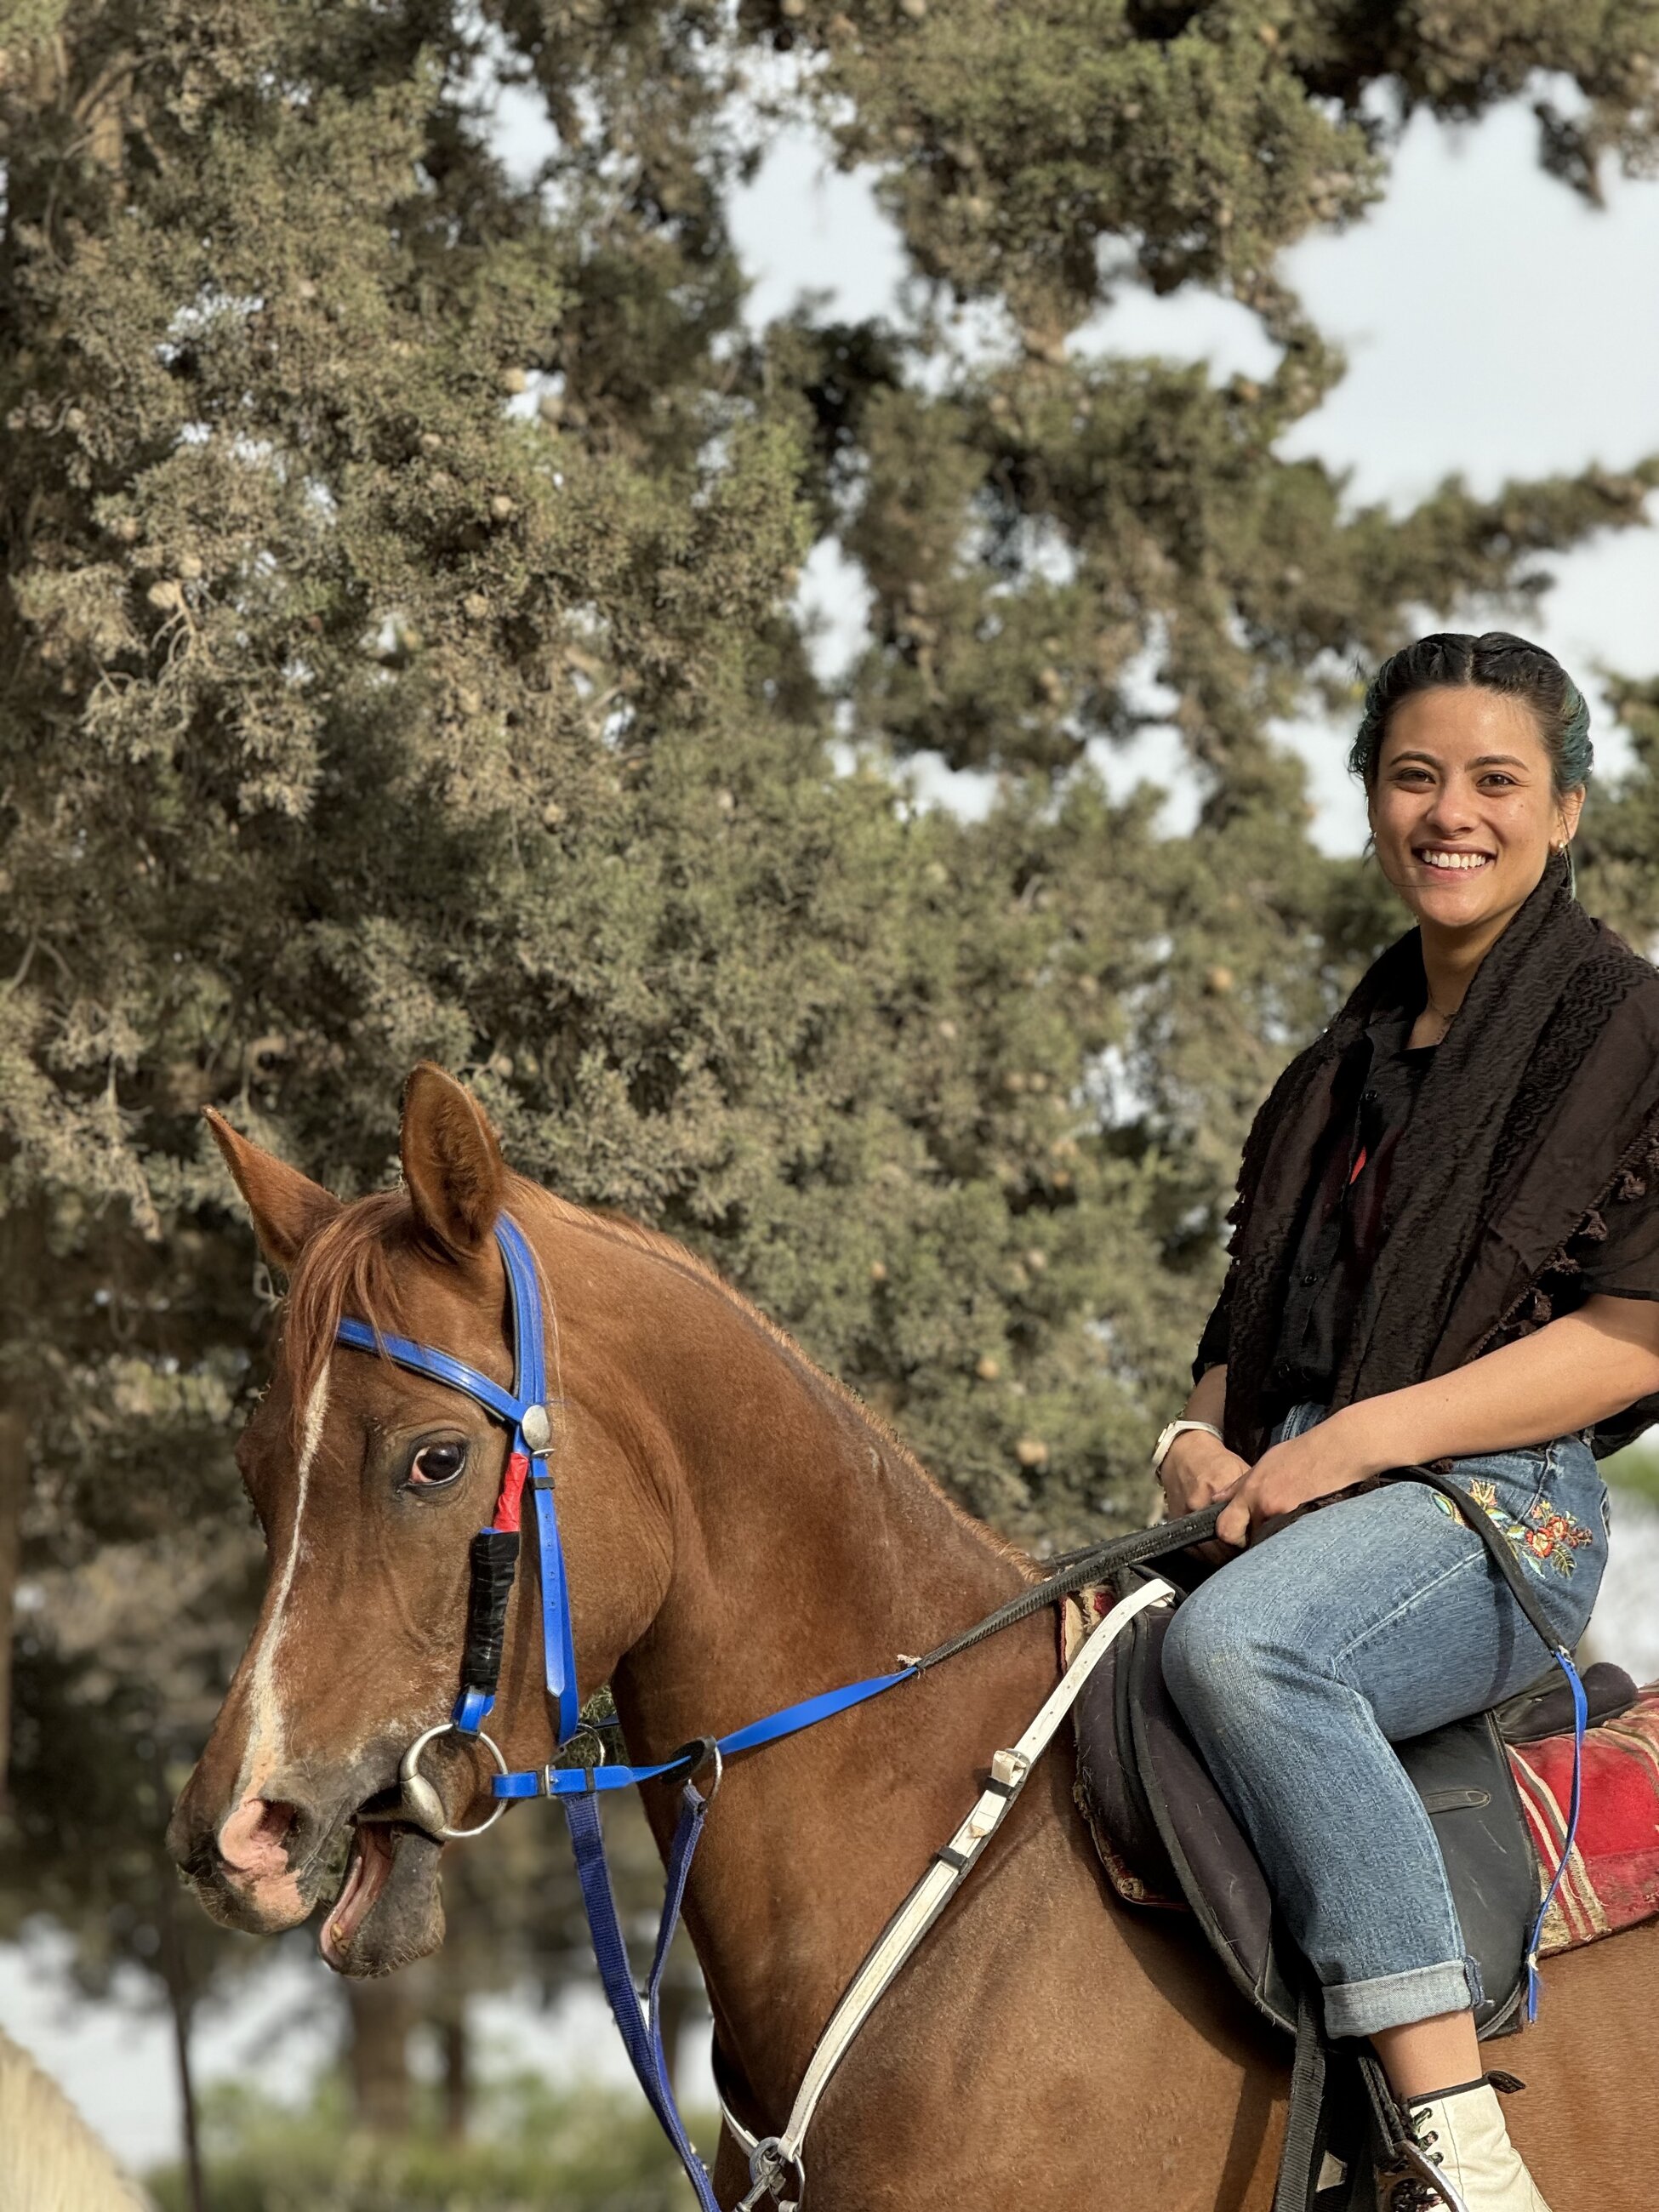 horseback riding (her name is Heba) just outside of Hebron